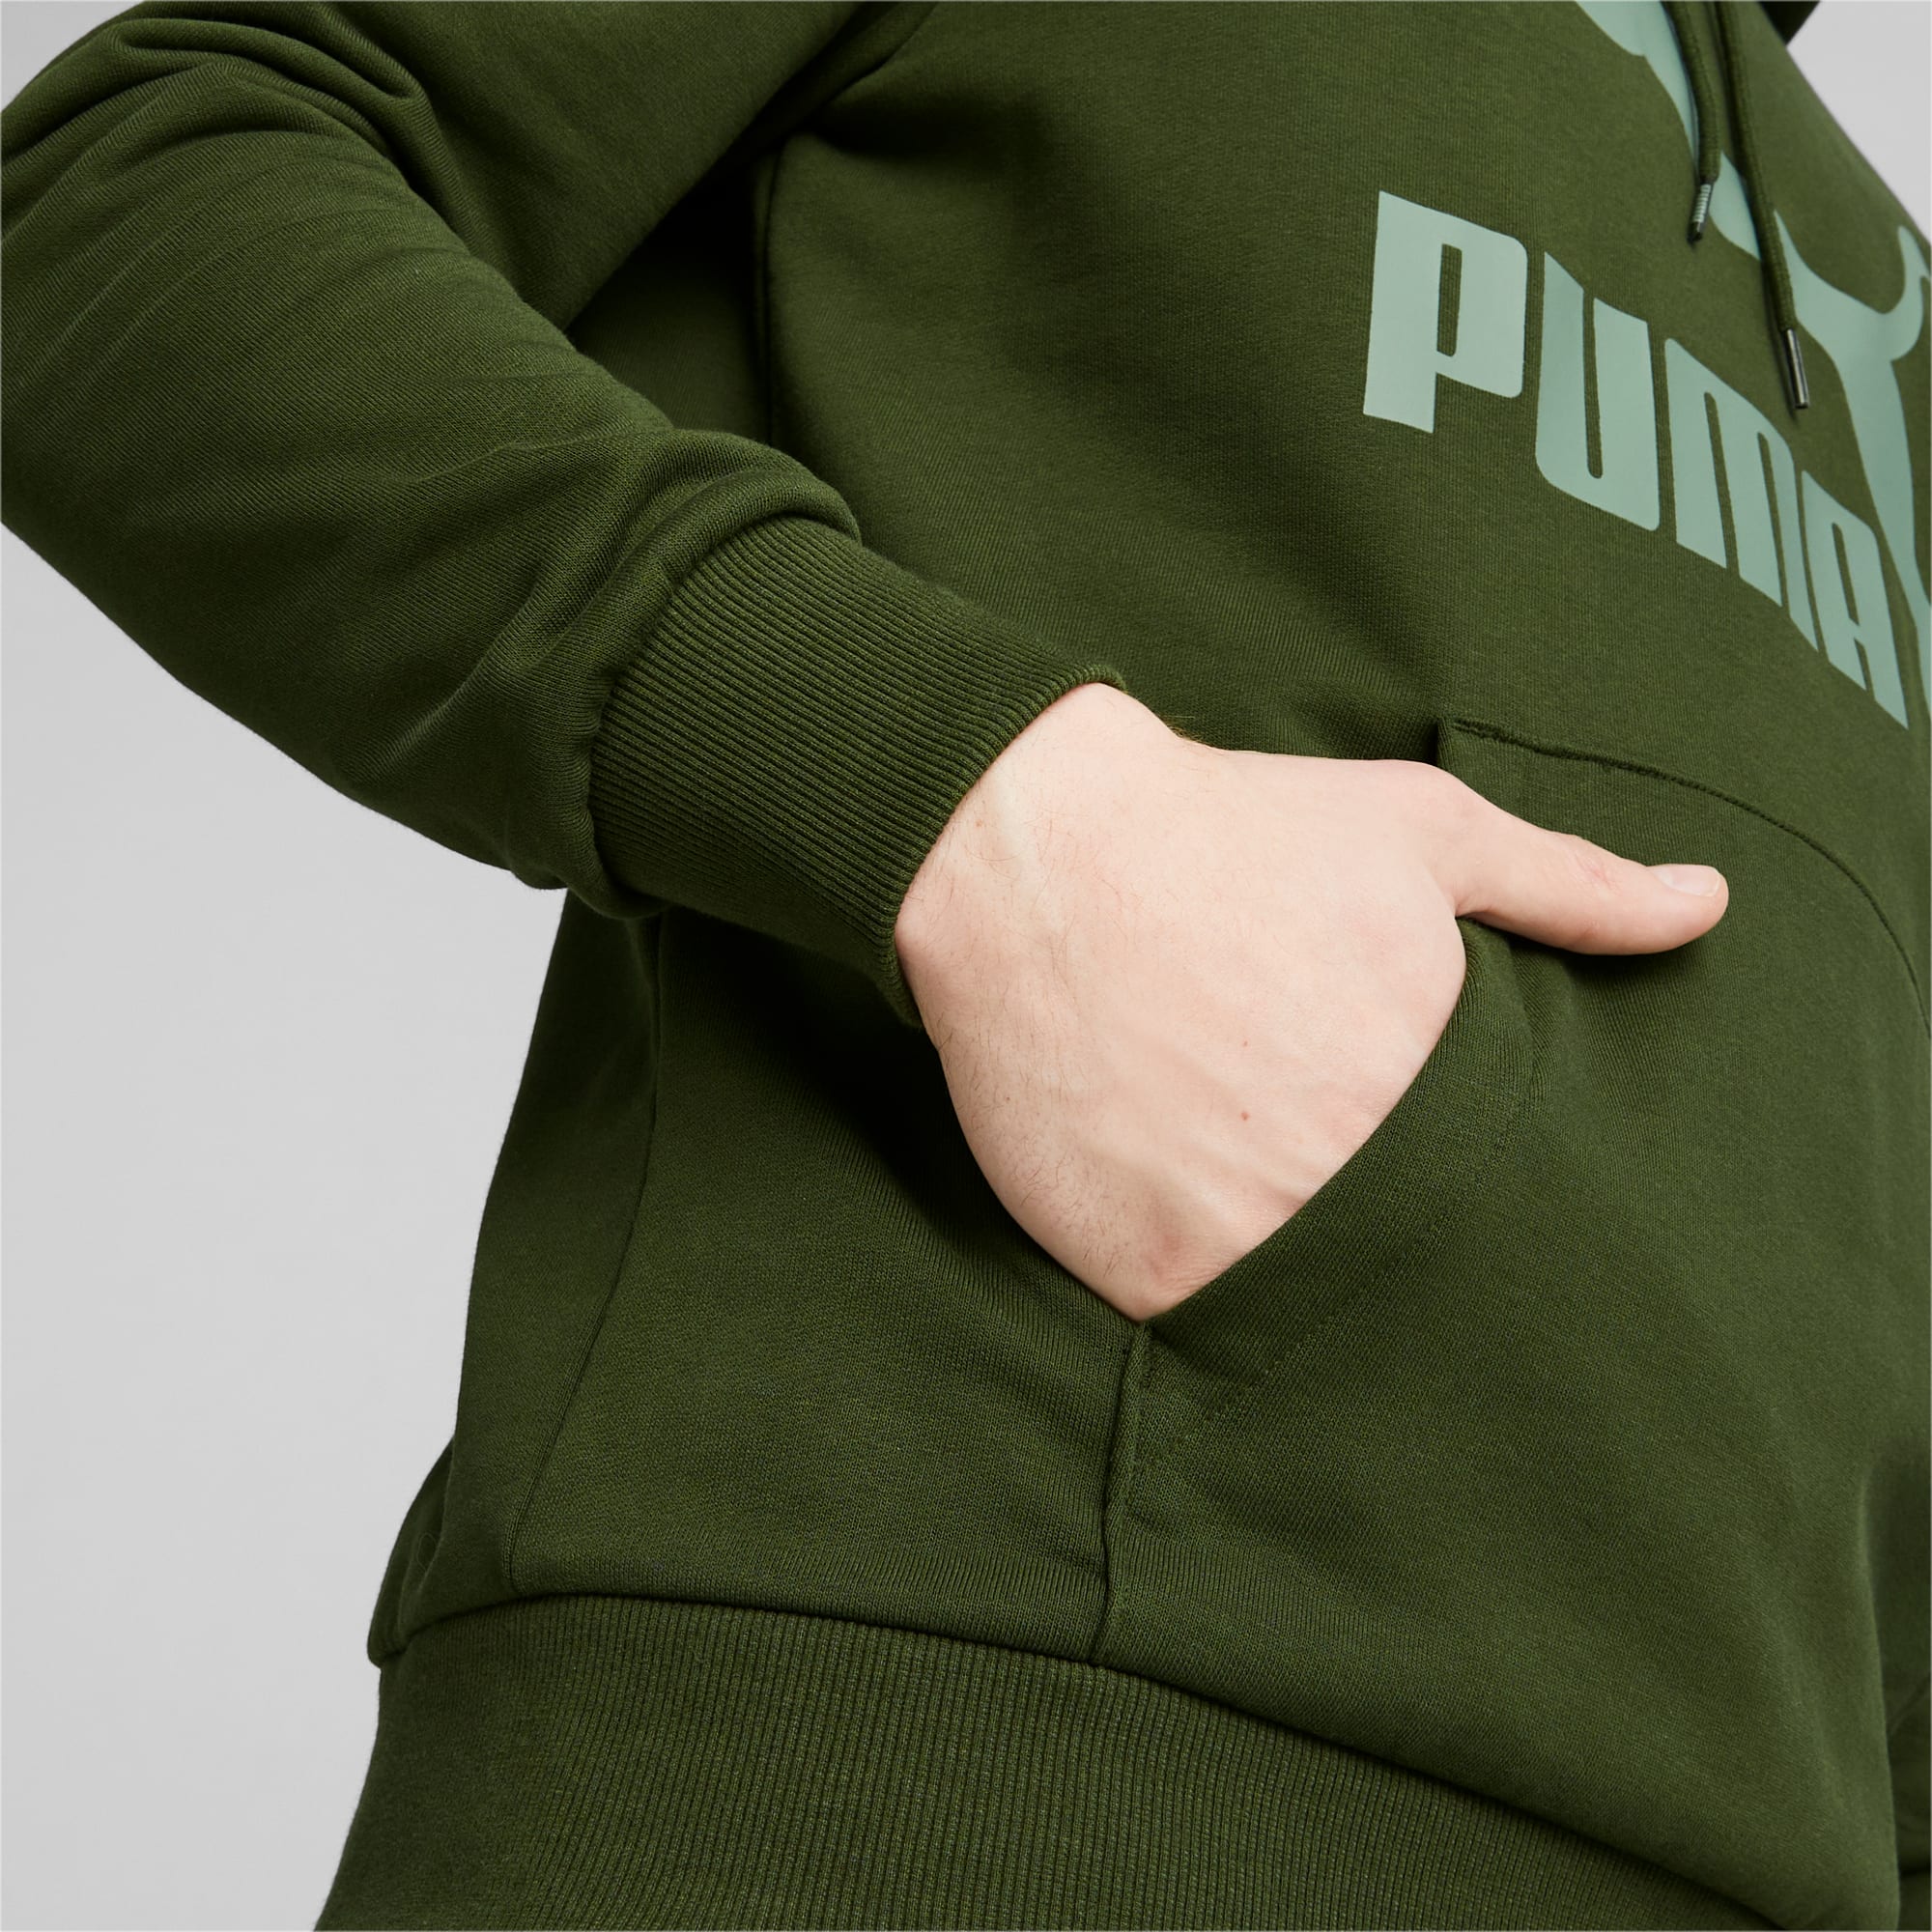 PUMA Classics Logo Hoodie Men, Myrtle, Size XS, Clothing